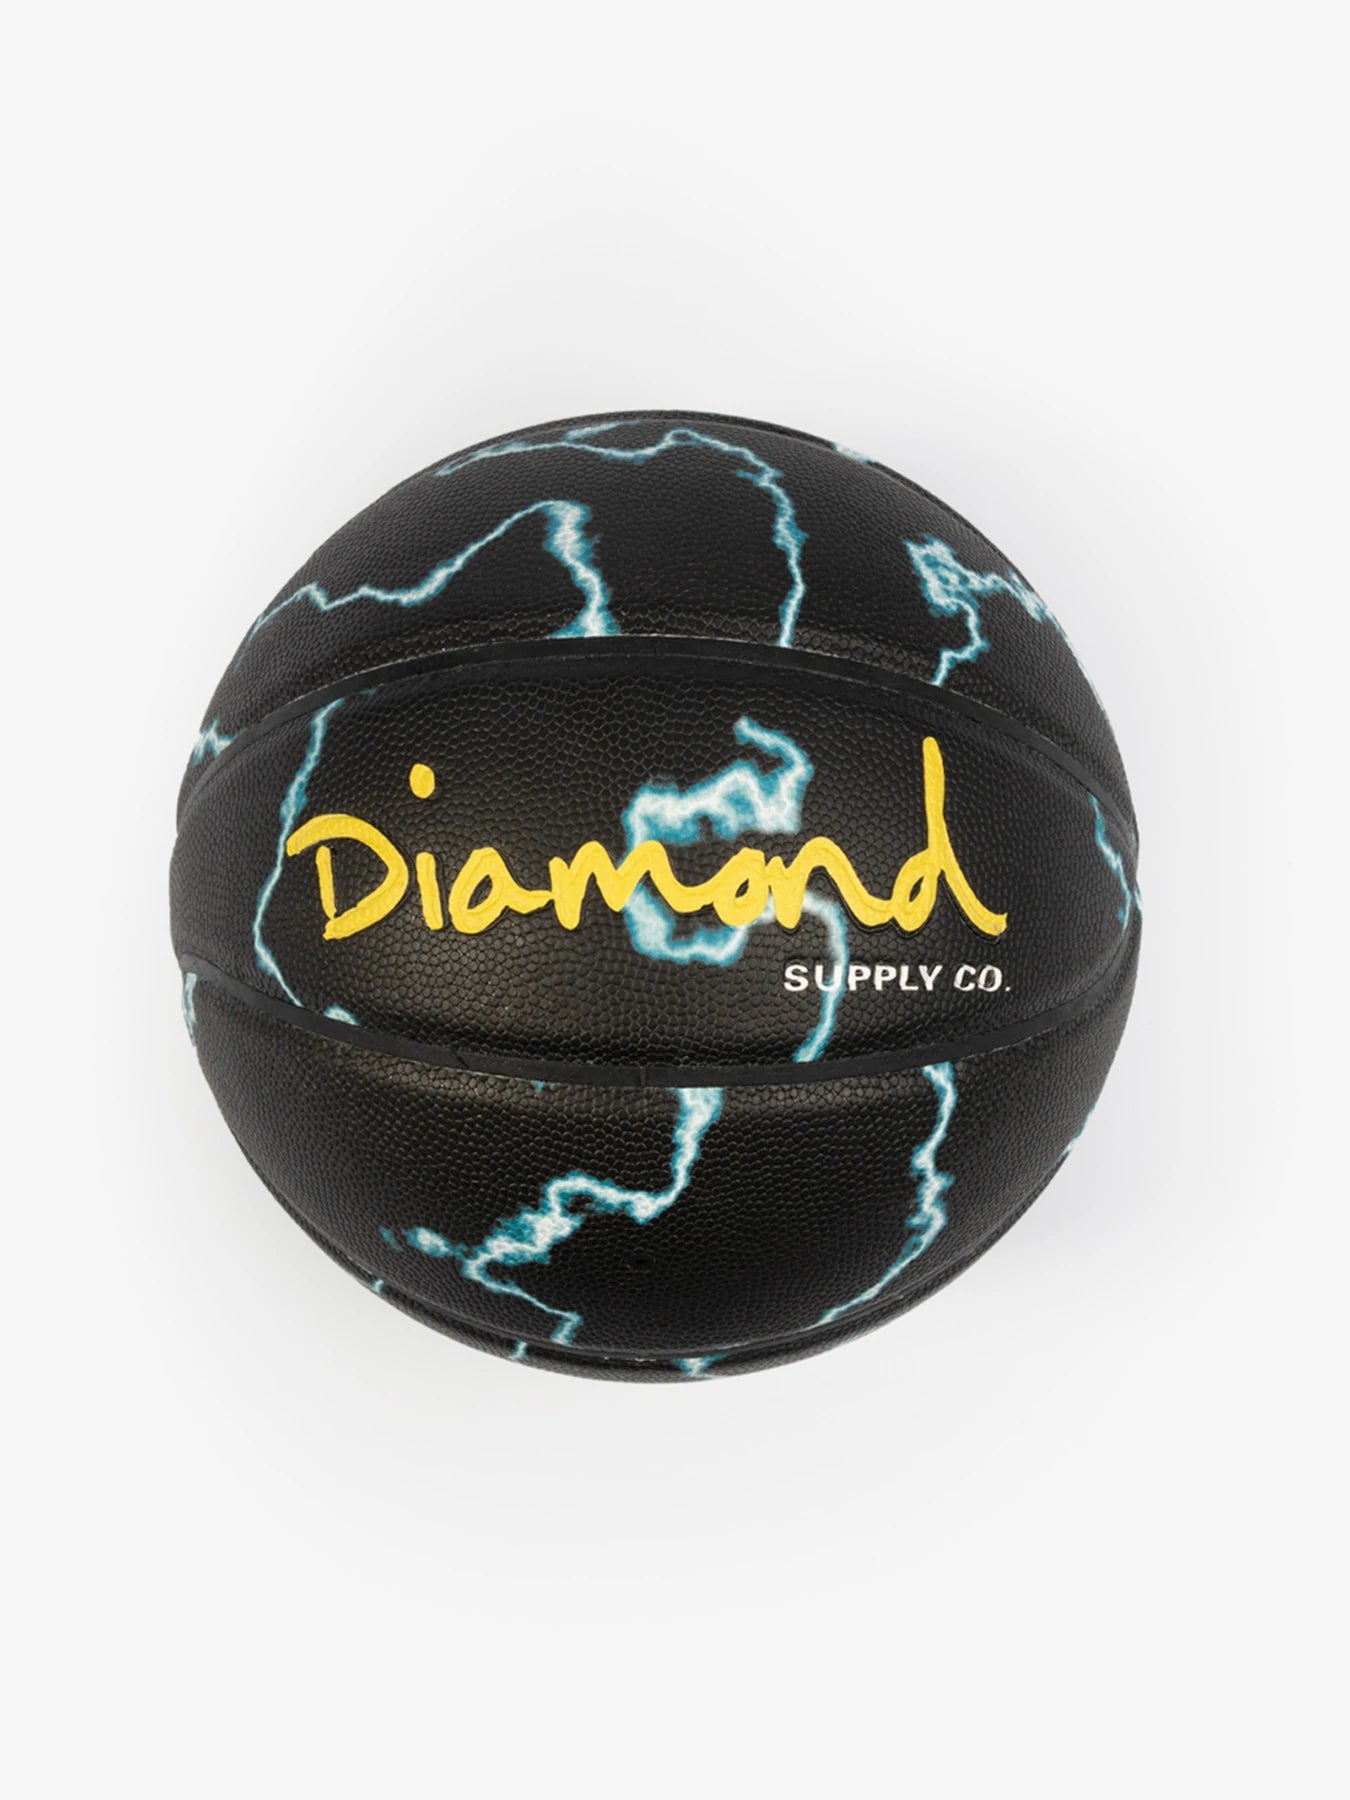 Diamond Supply Company Mad Lightning Basketball